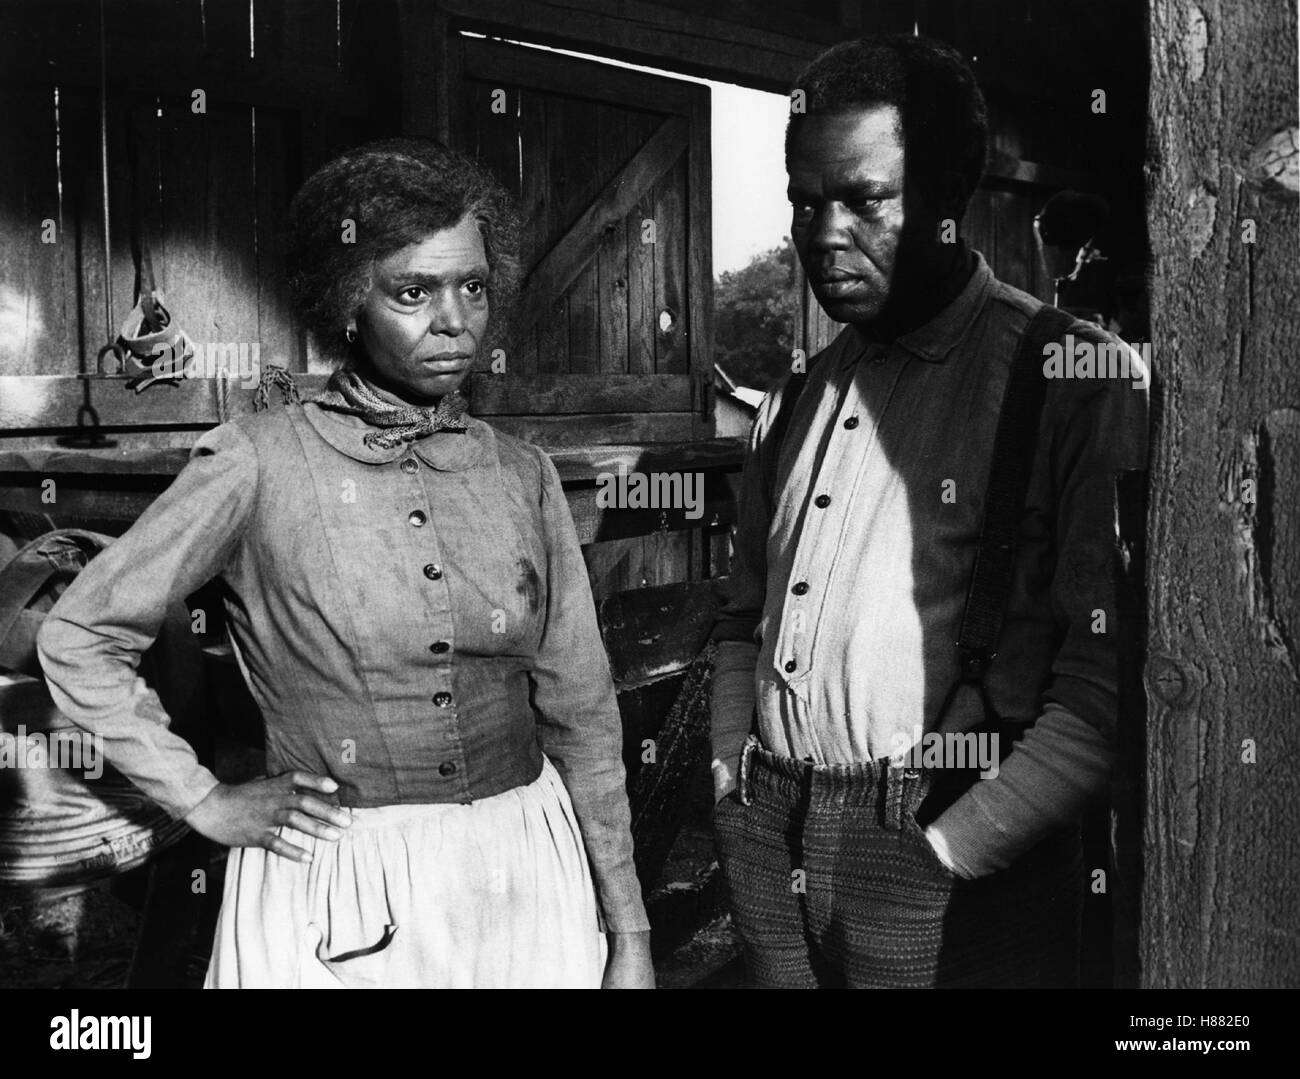 Roots - Die nächste Generation, (ROOTS - THE NEXT GENERATION) Serienspecial USA 1978, Regie: Charles S. Dubin, LYNNE MOODY, GEORG STANFORD BROWN Stock Photo